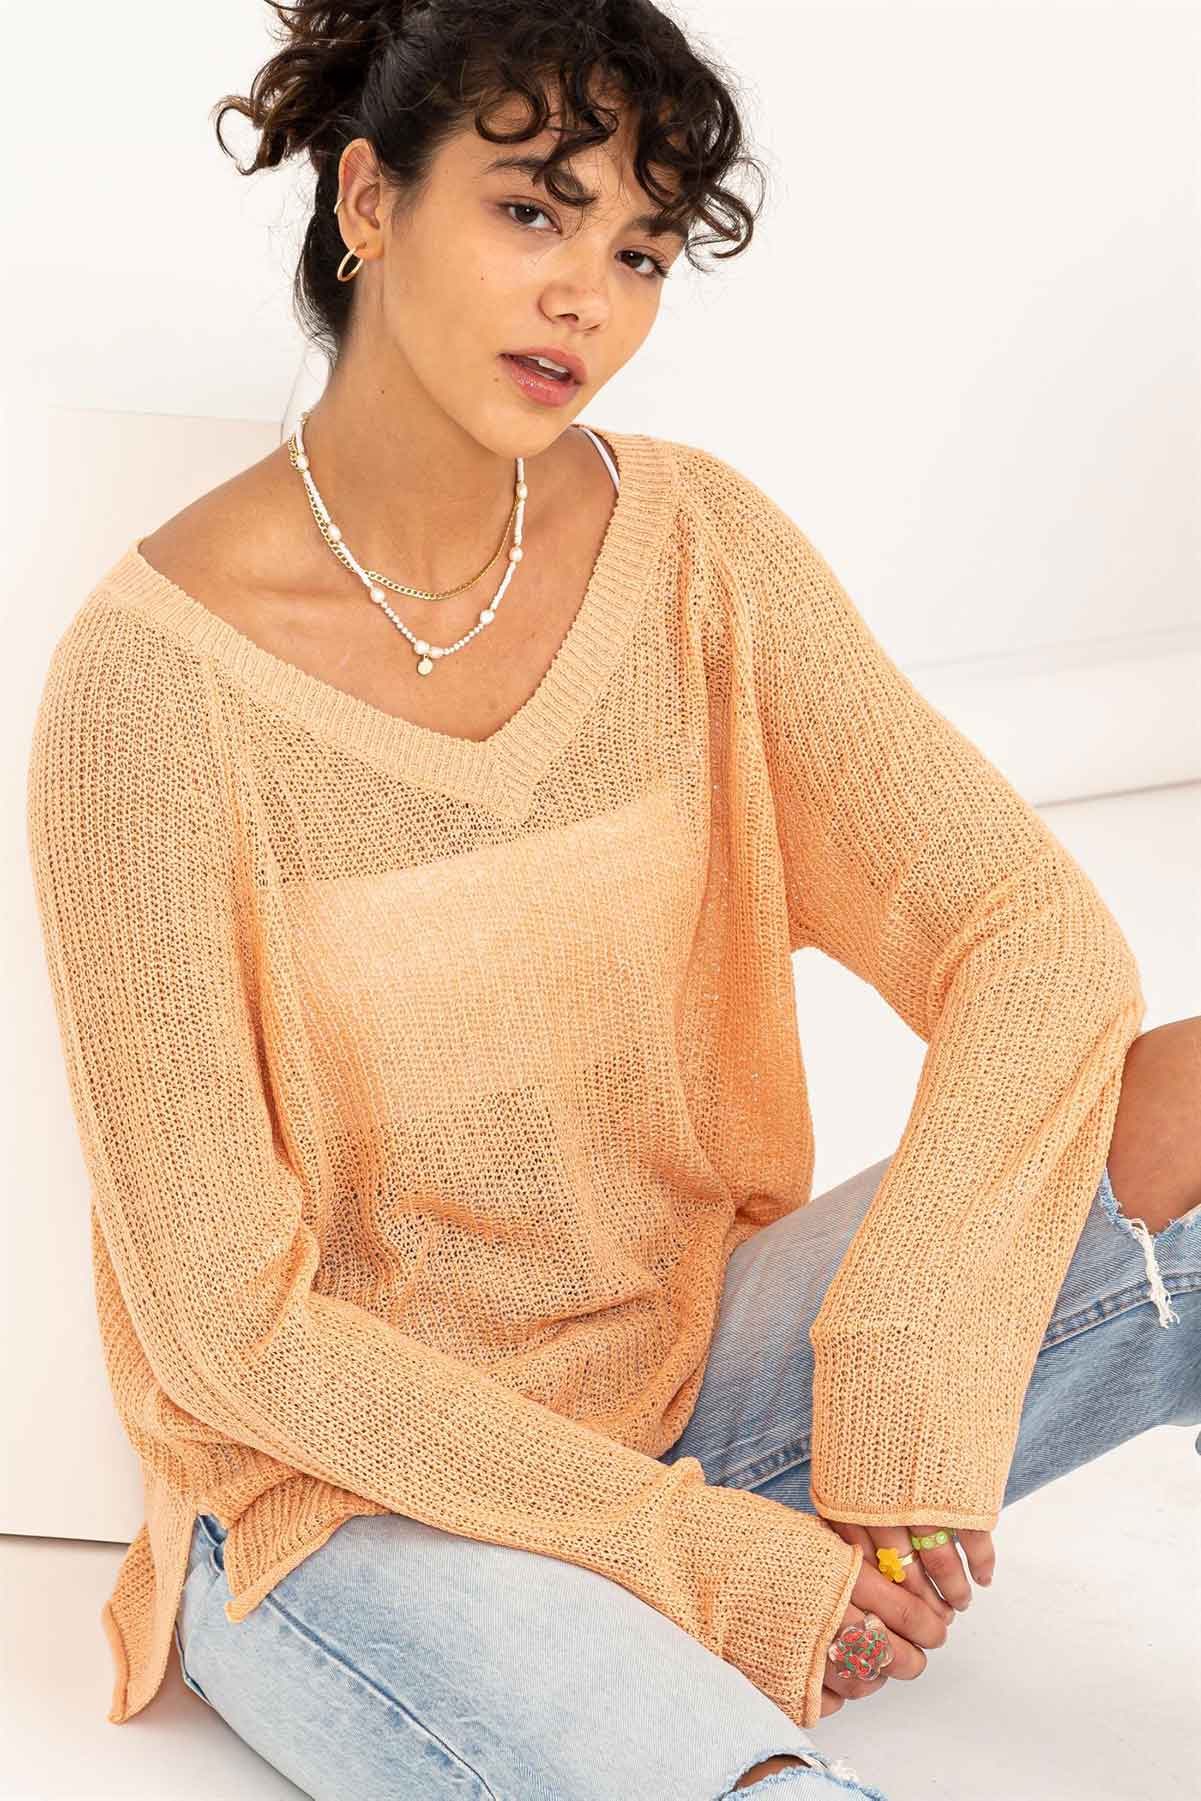 Double Zero - Sophia Sweater - Tropical Peach - Front